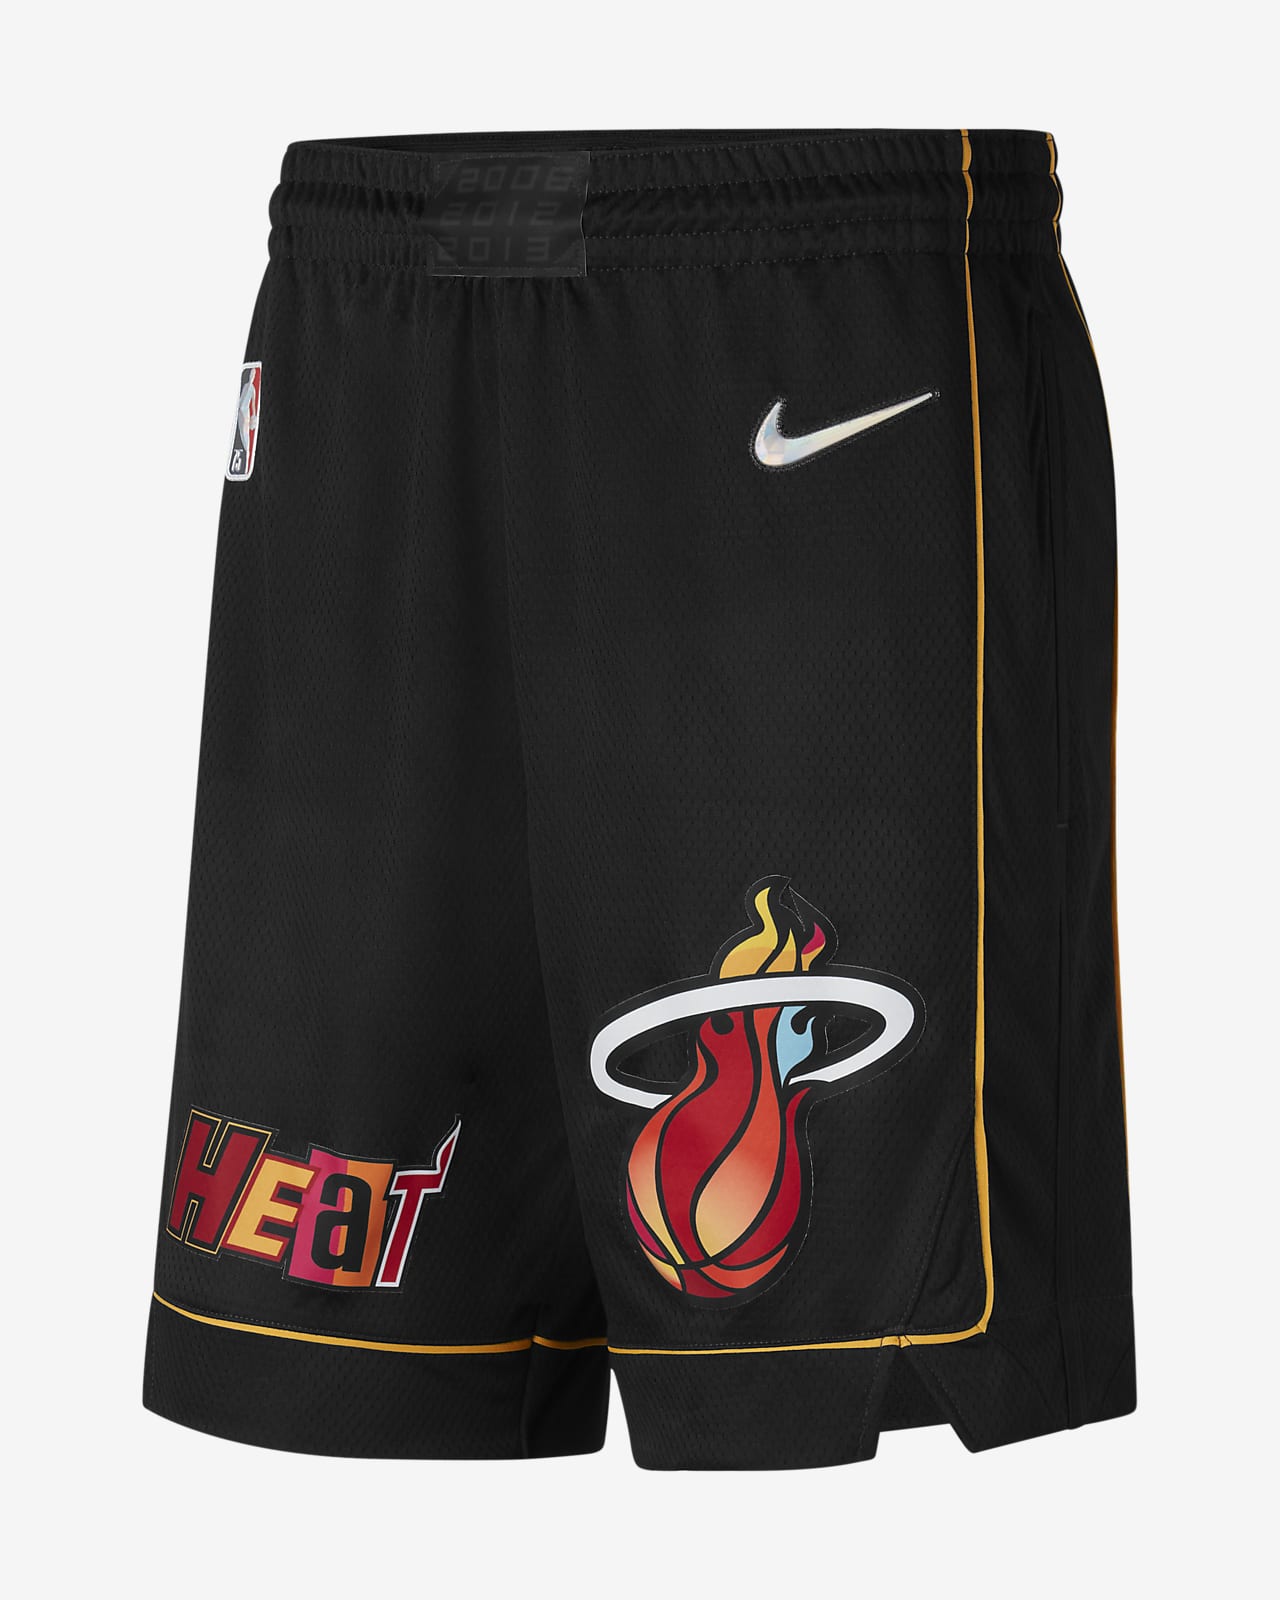 New Miami Heat Basketball Shorts Men's Stitched Jerseys Pants Sports* 